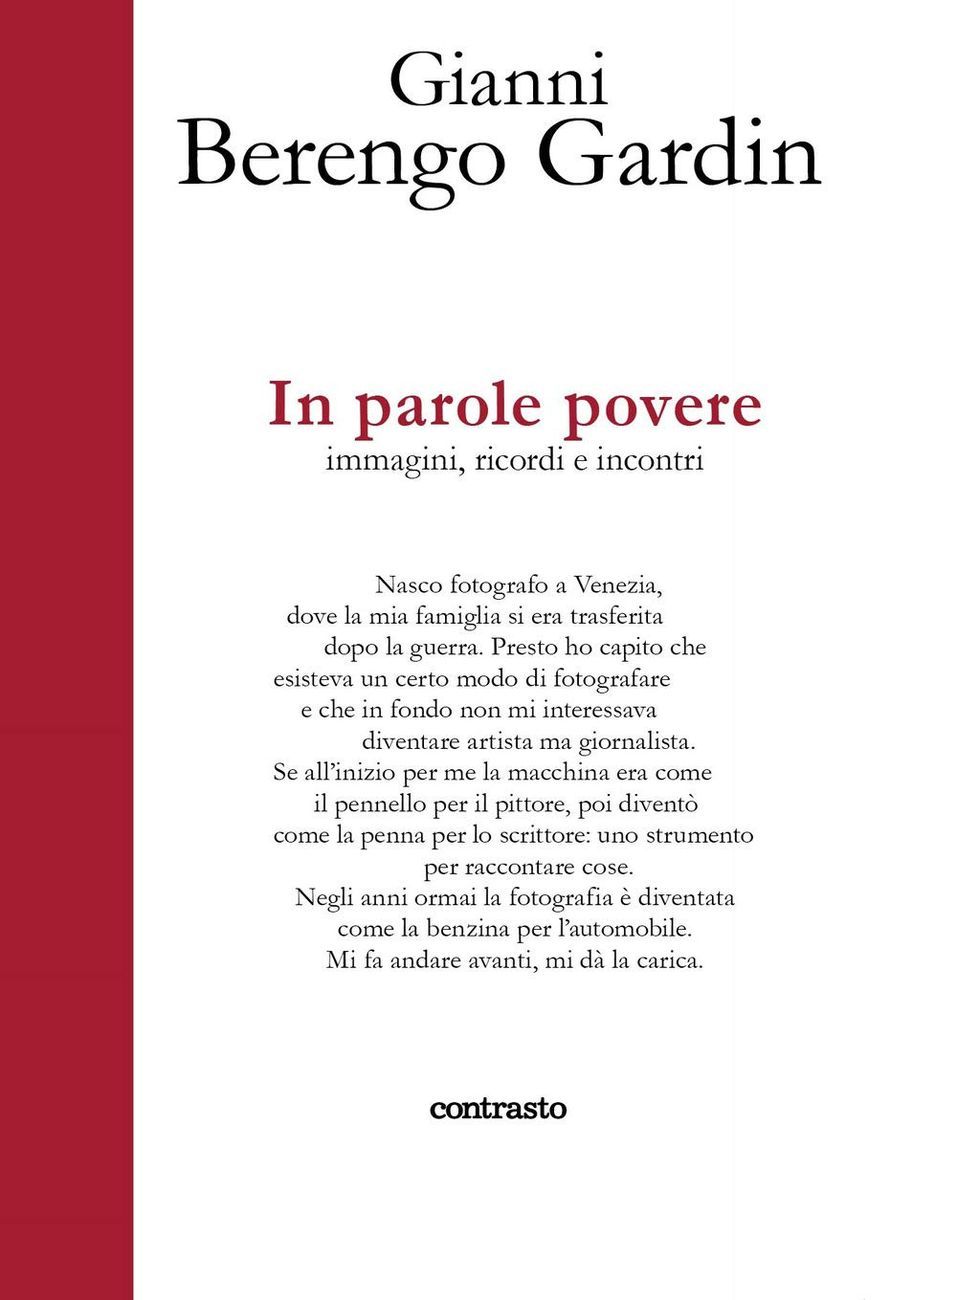 Gianni Berengo Gardin – In parole povere (Contrasto, Milano 2020)